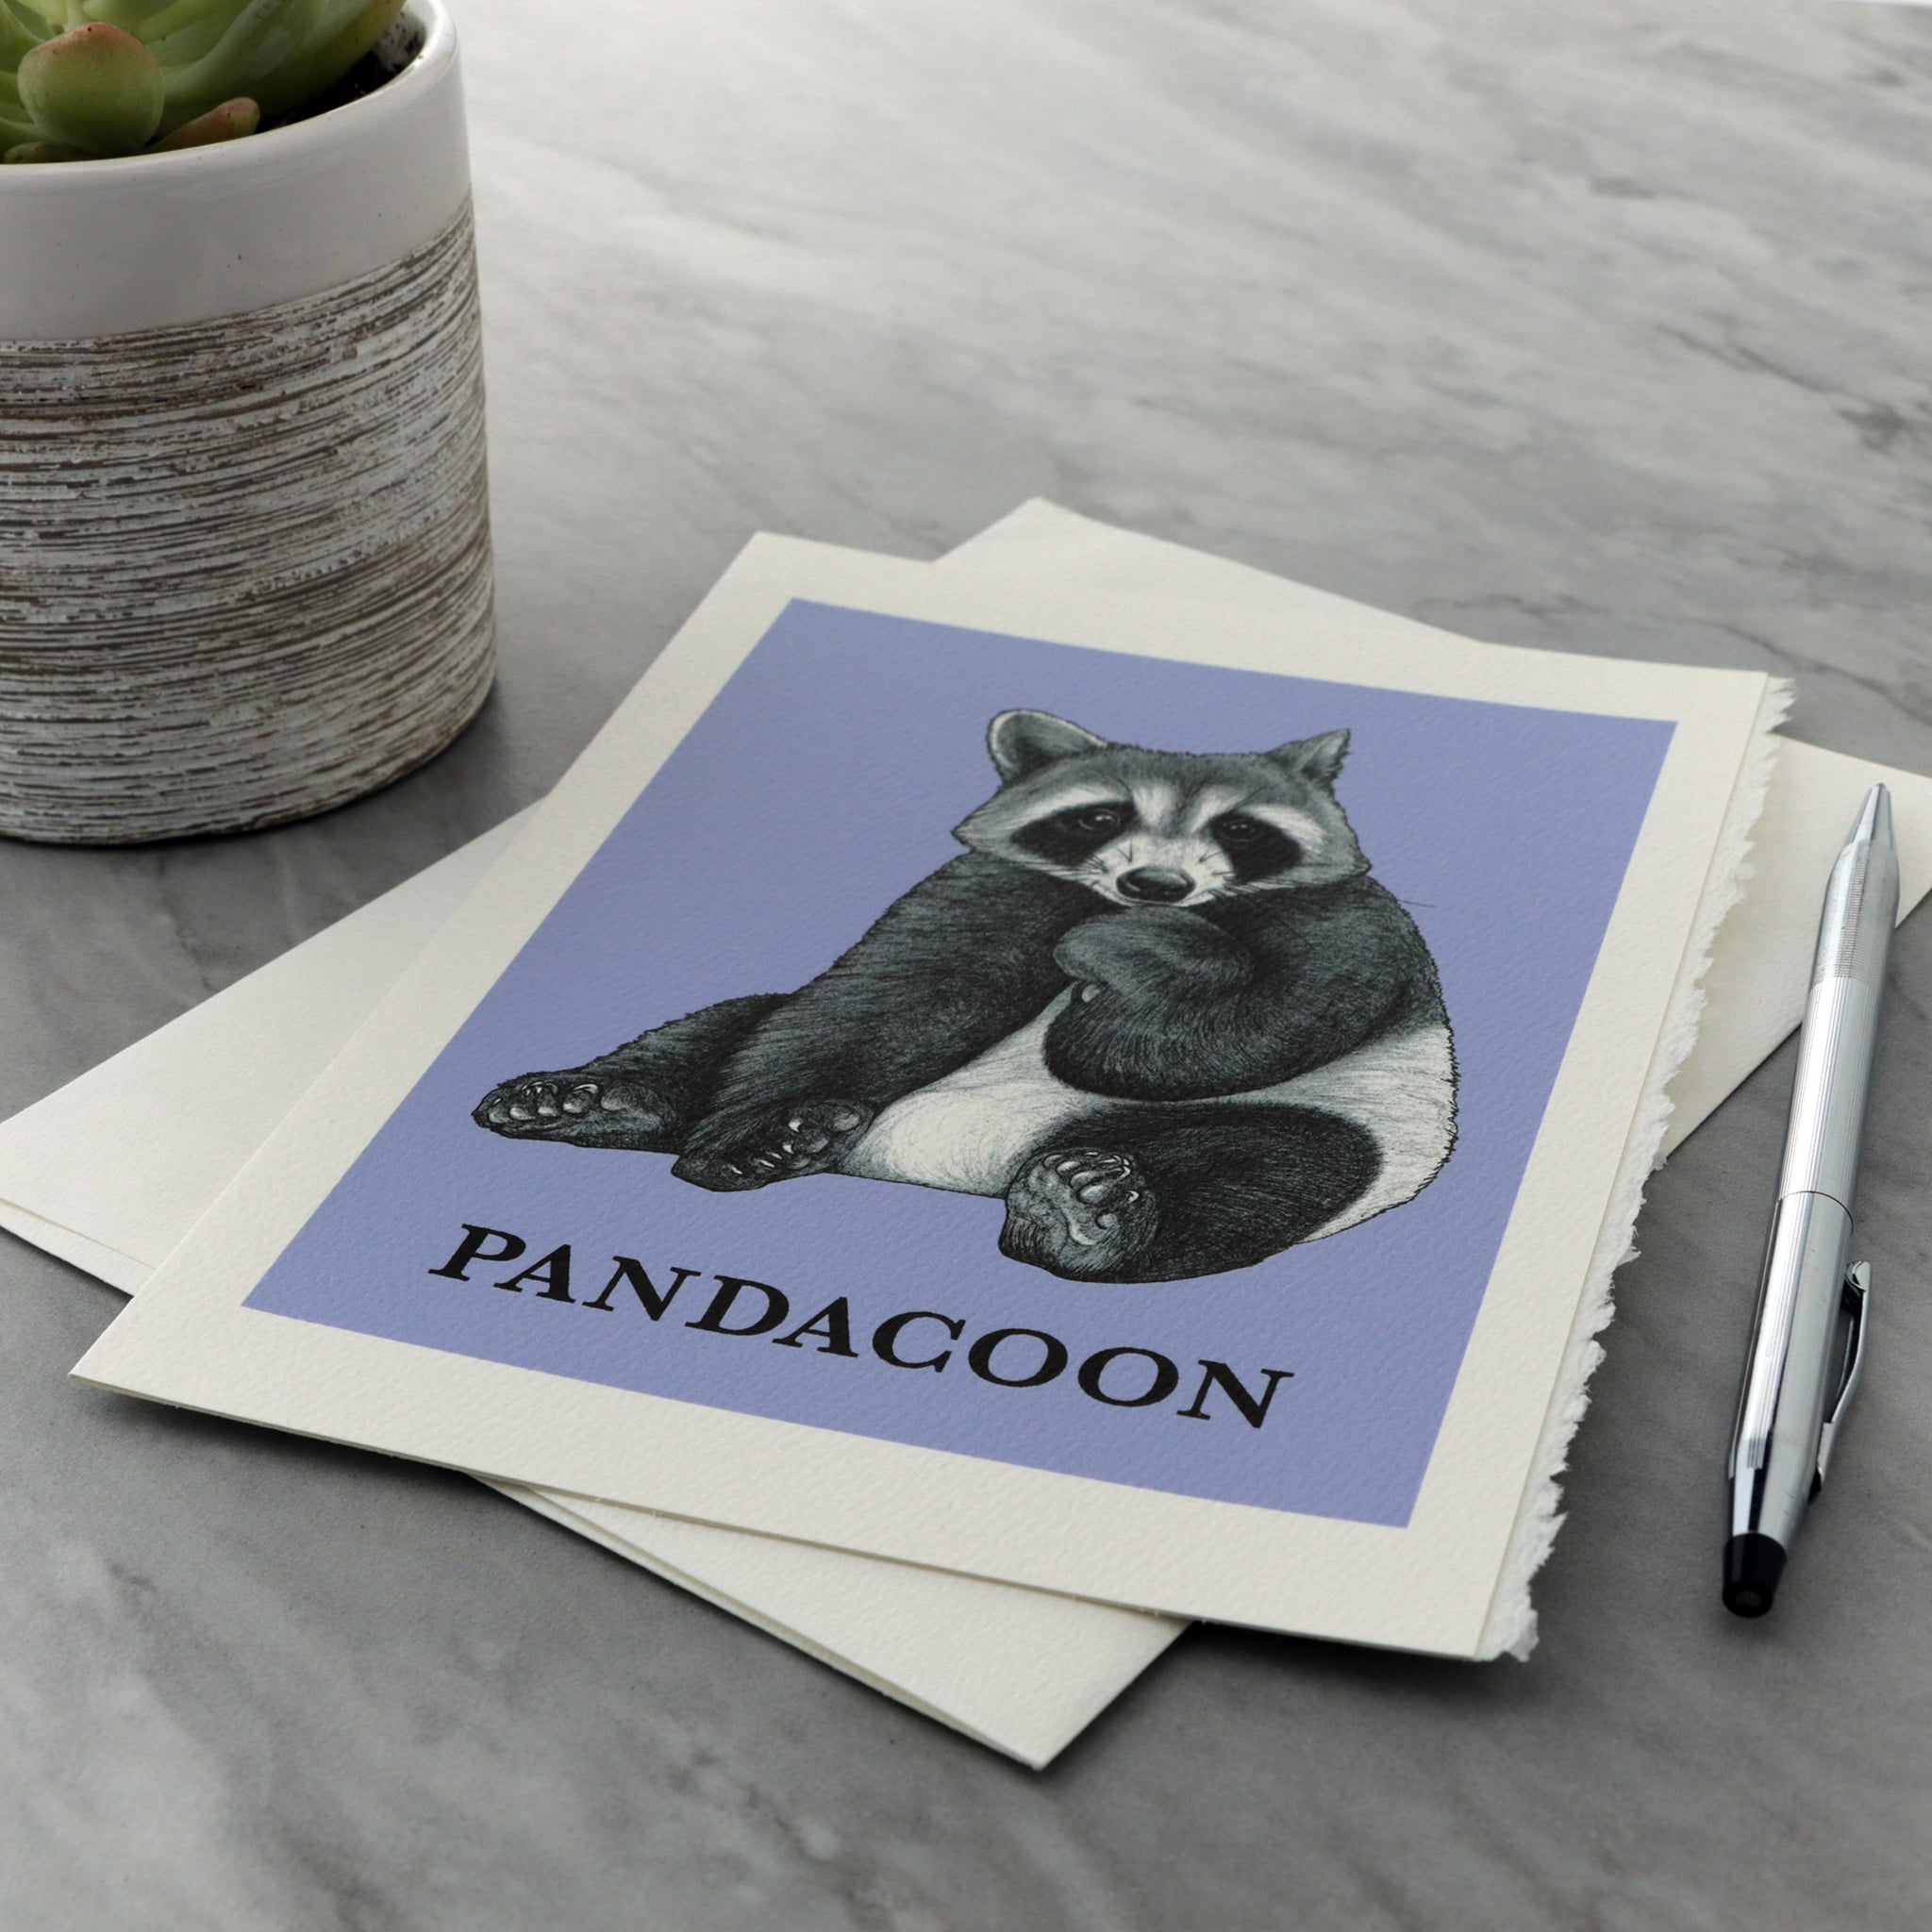 Pandacoon 5x7" Greeting Card